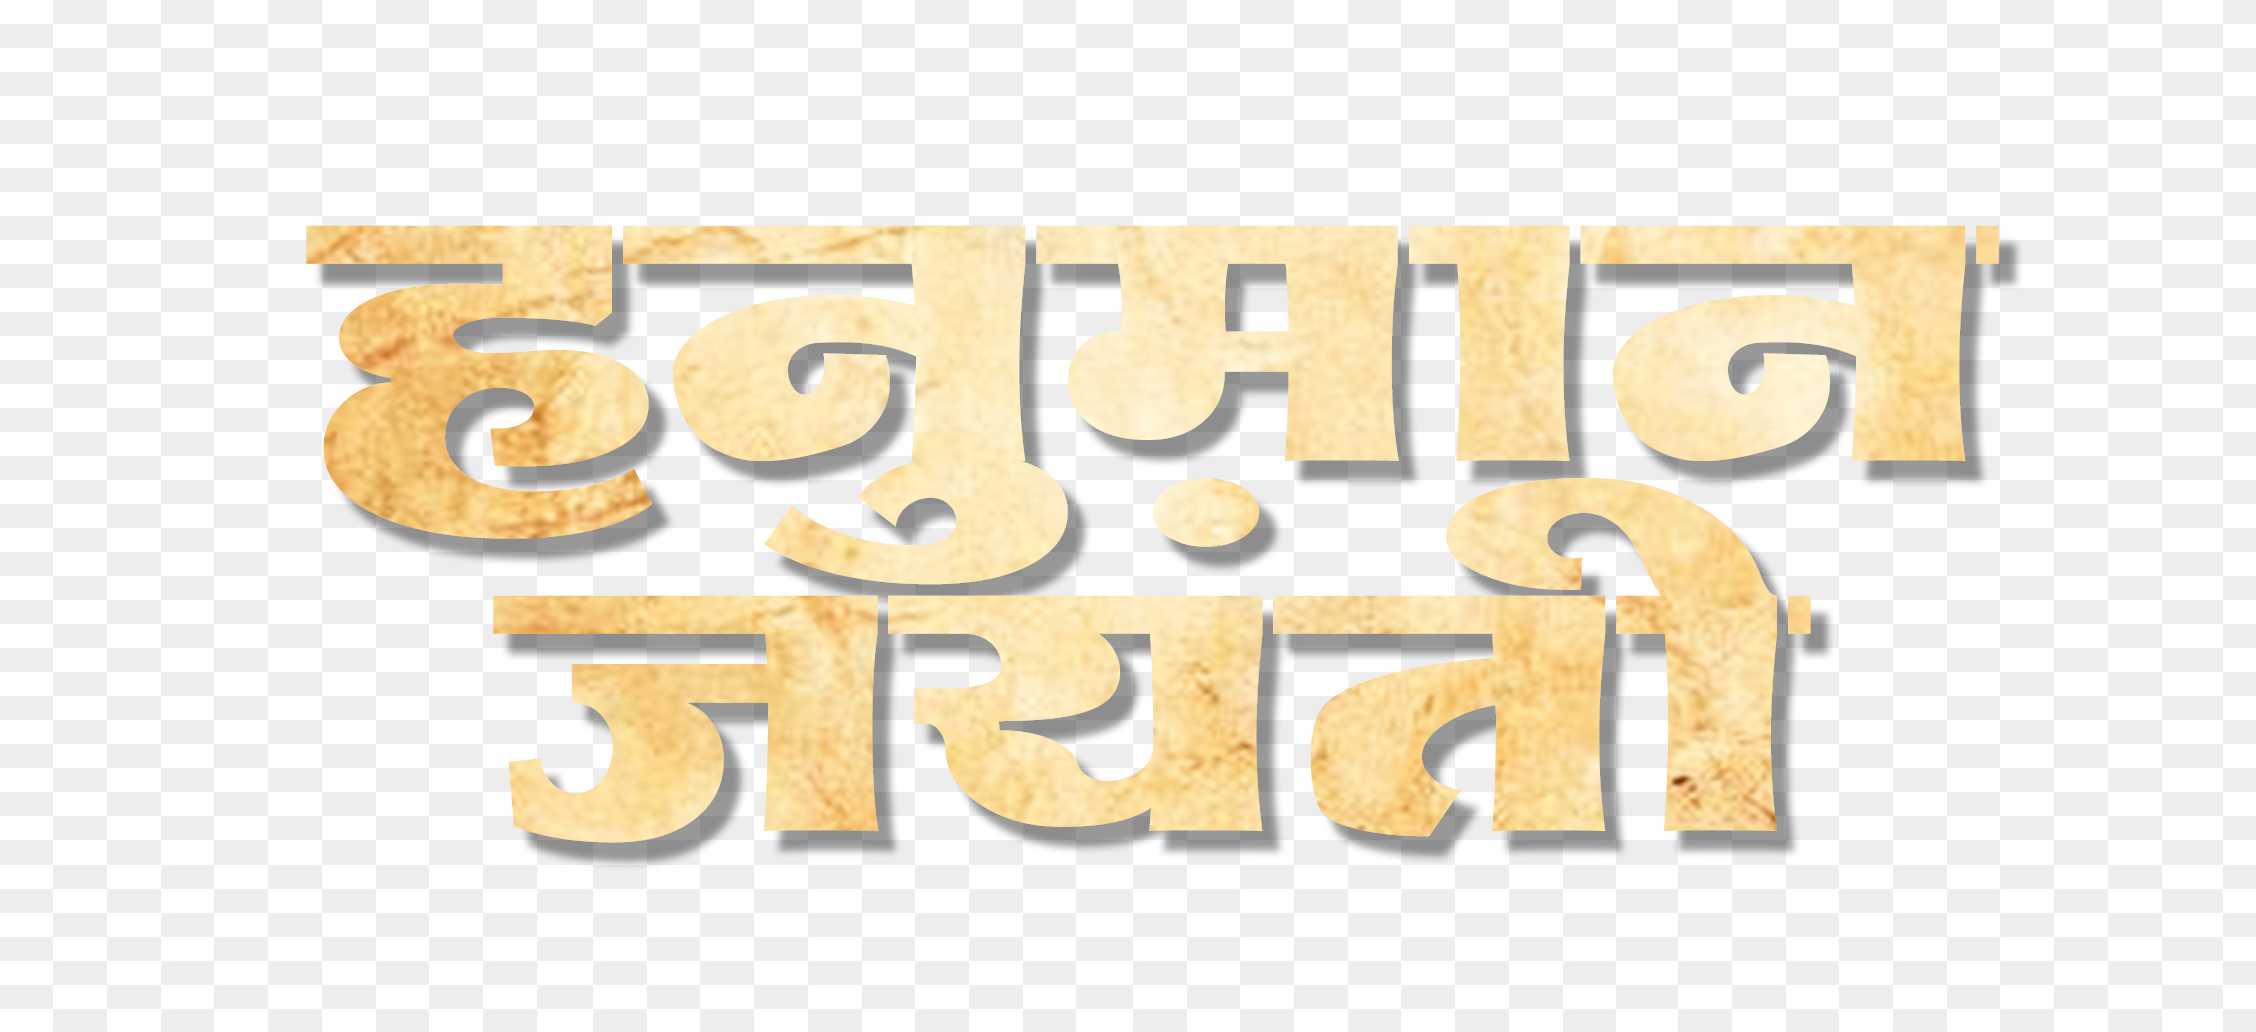 Hanuman jayanti in hindi text PNG images download 